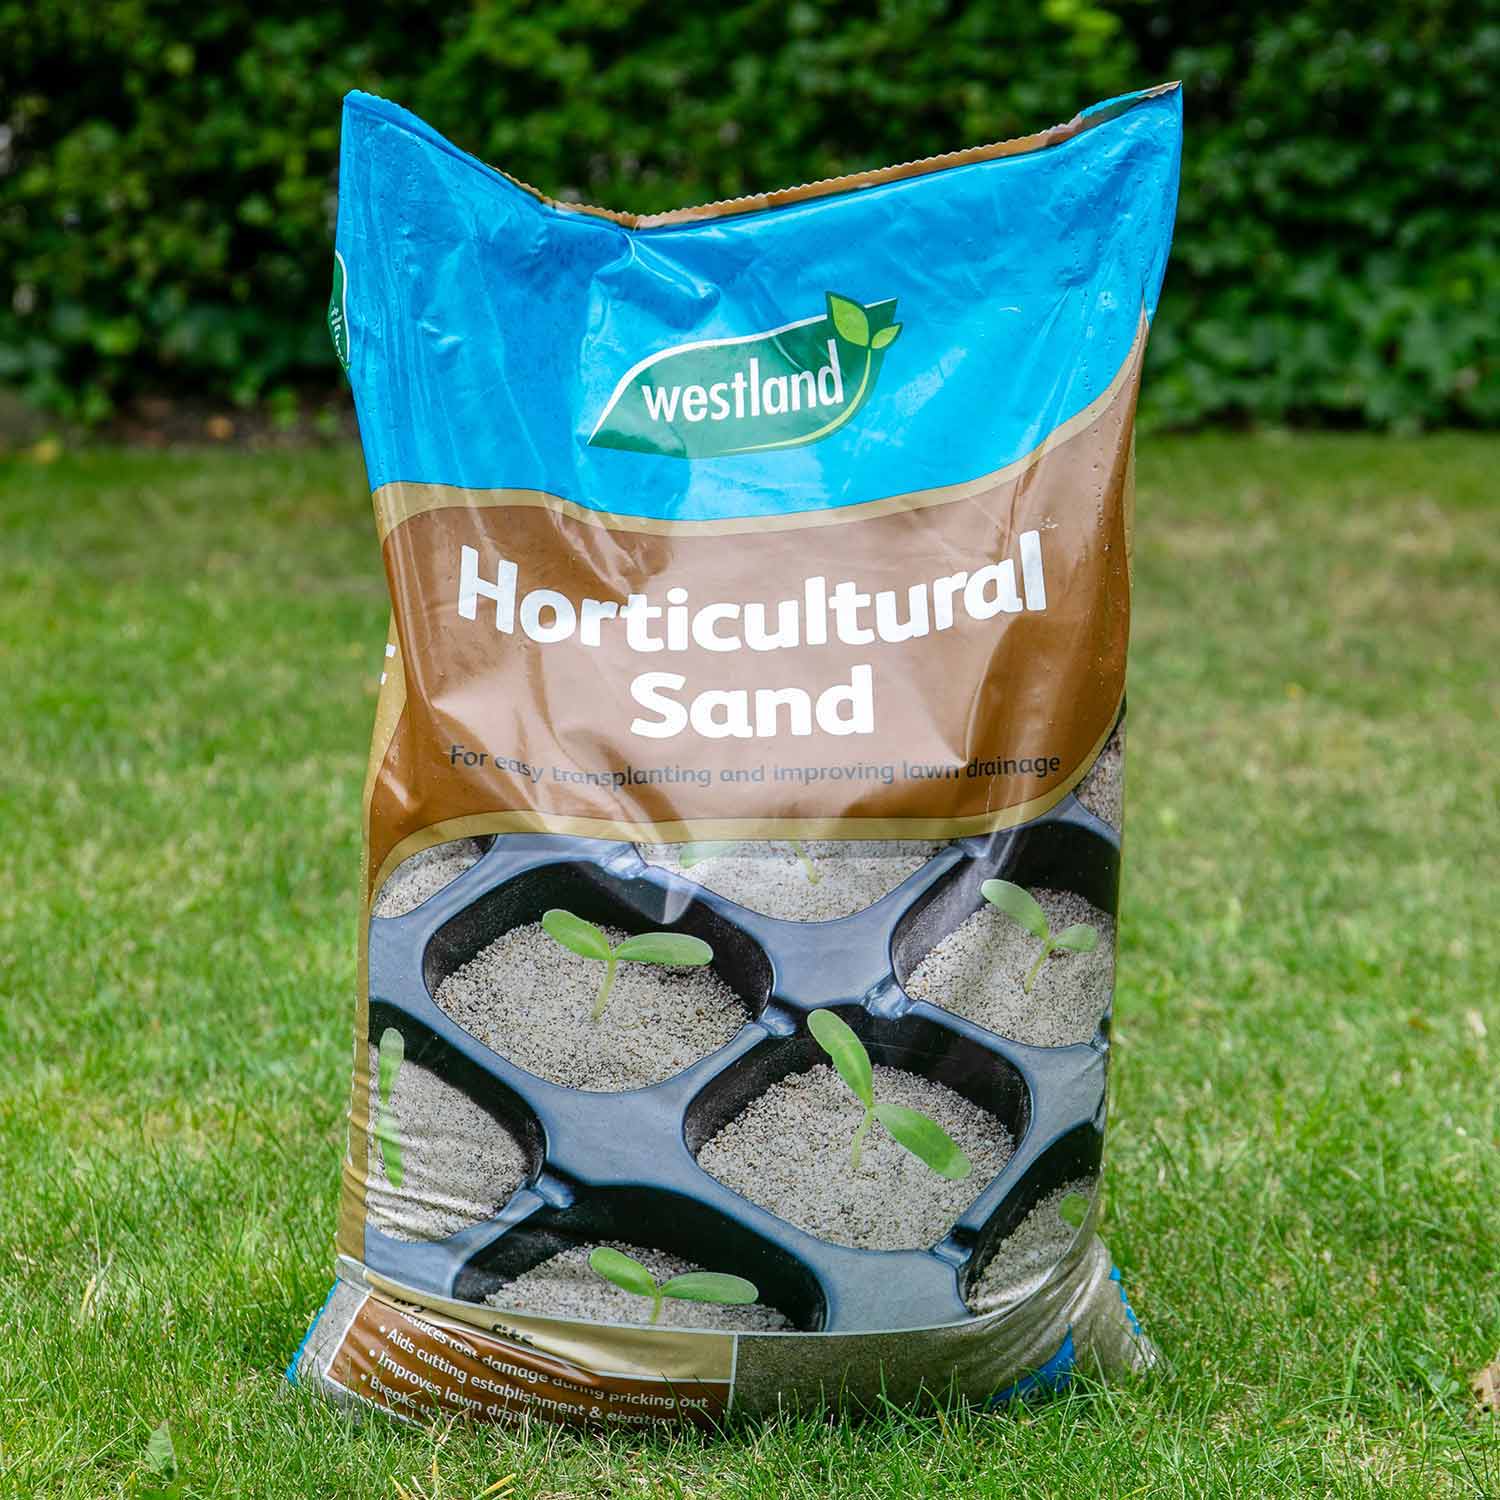 Horticultural Sand